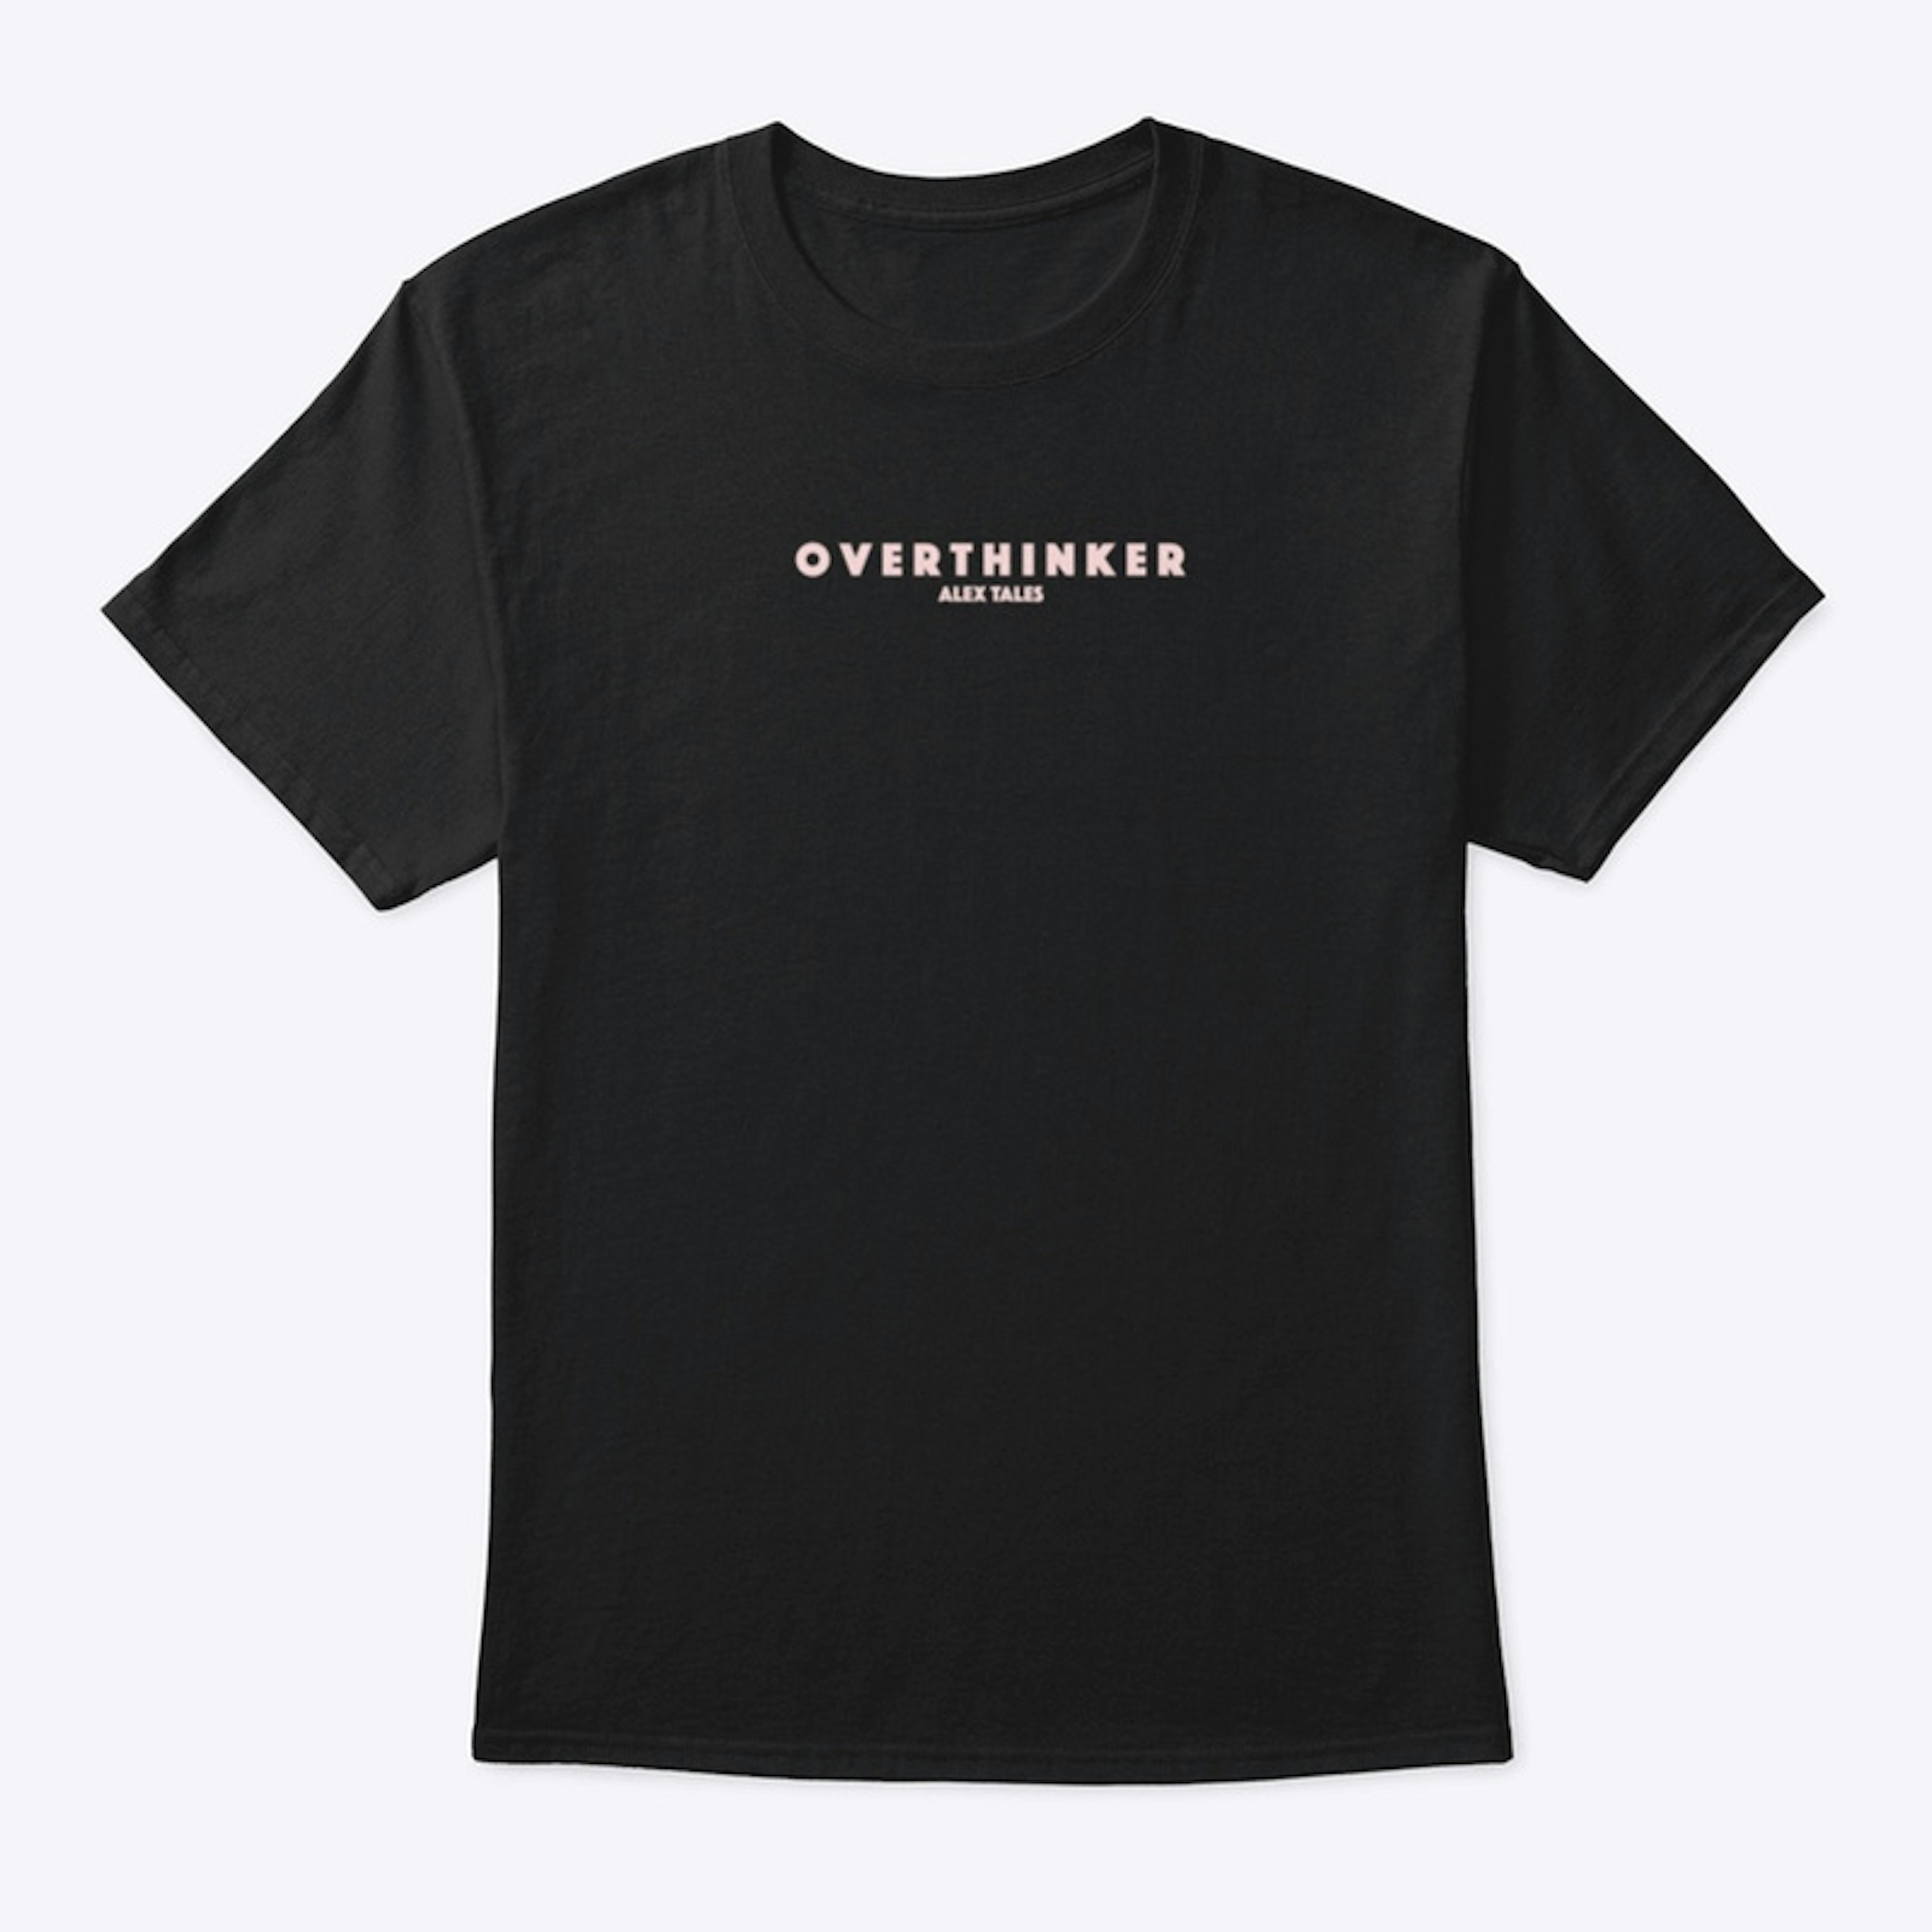 T-Shirt "OVERTHINKER" - Alex Tales